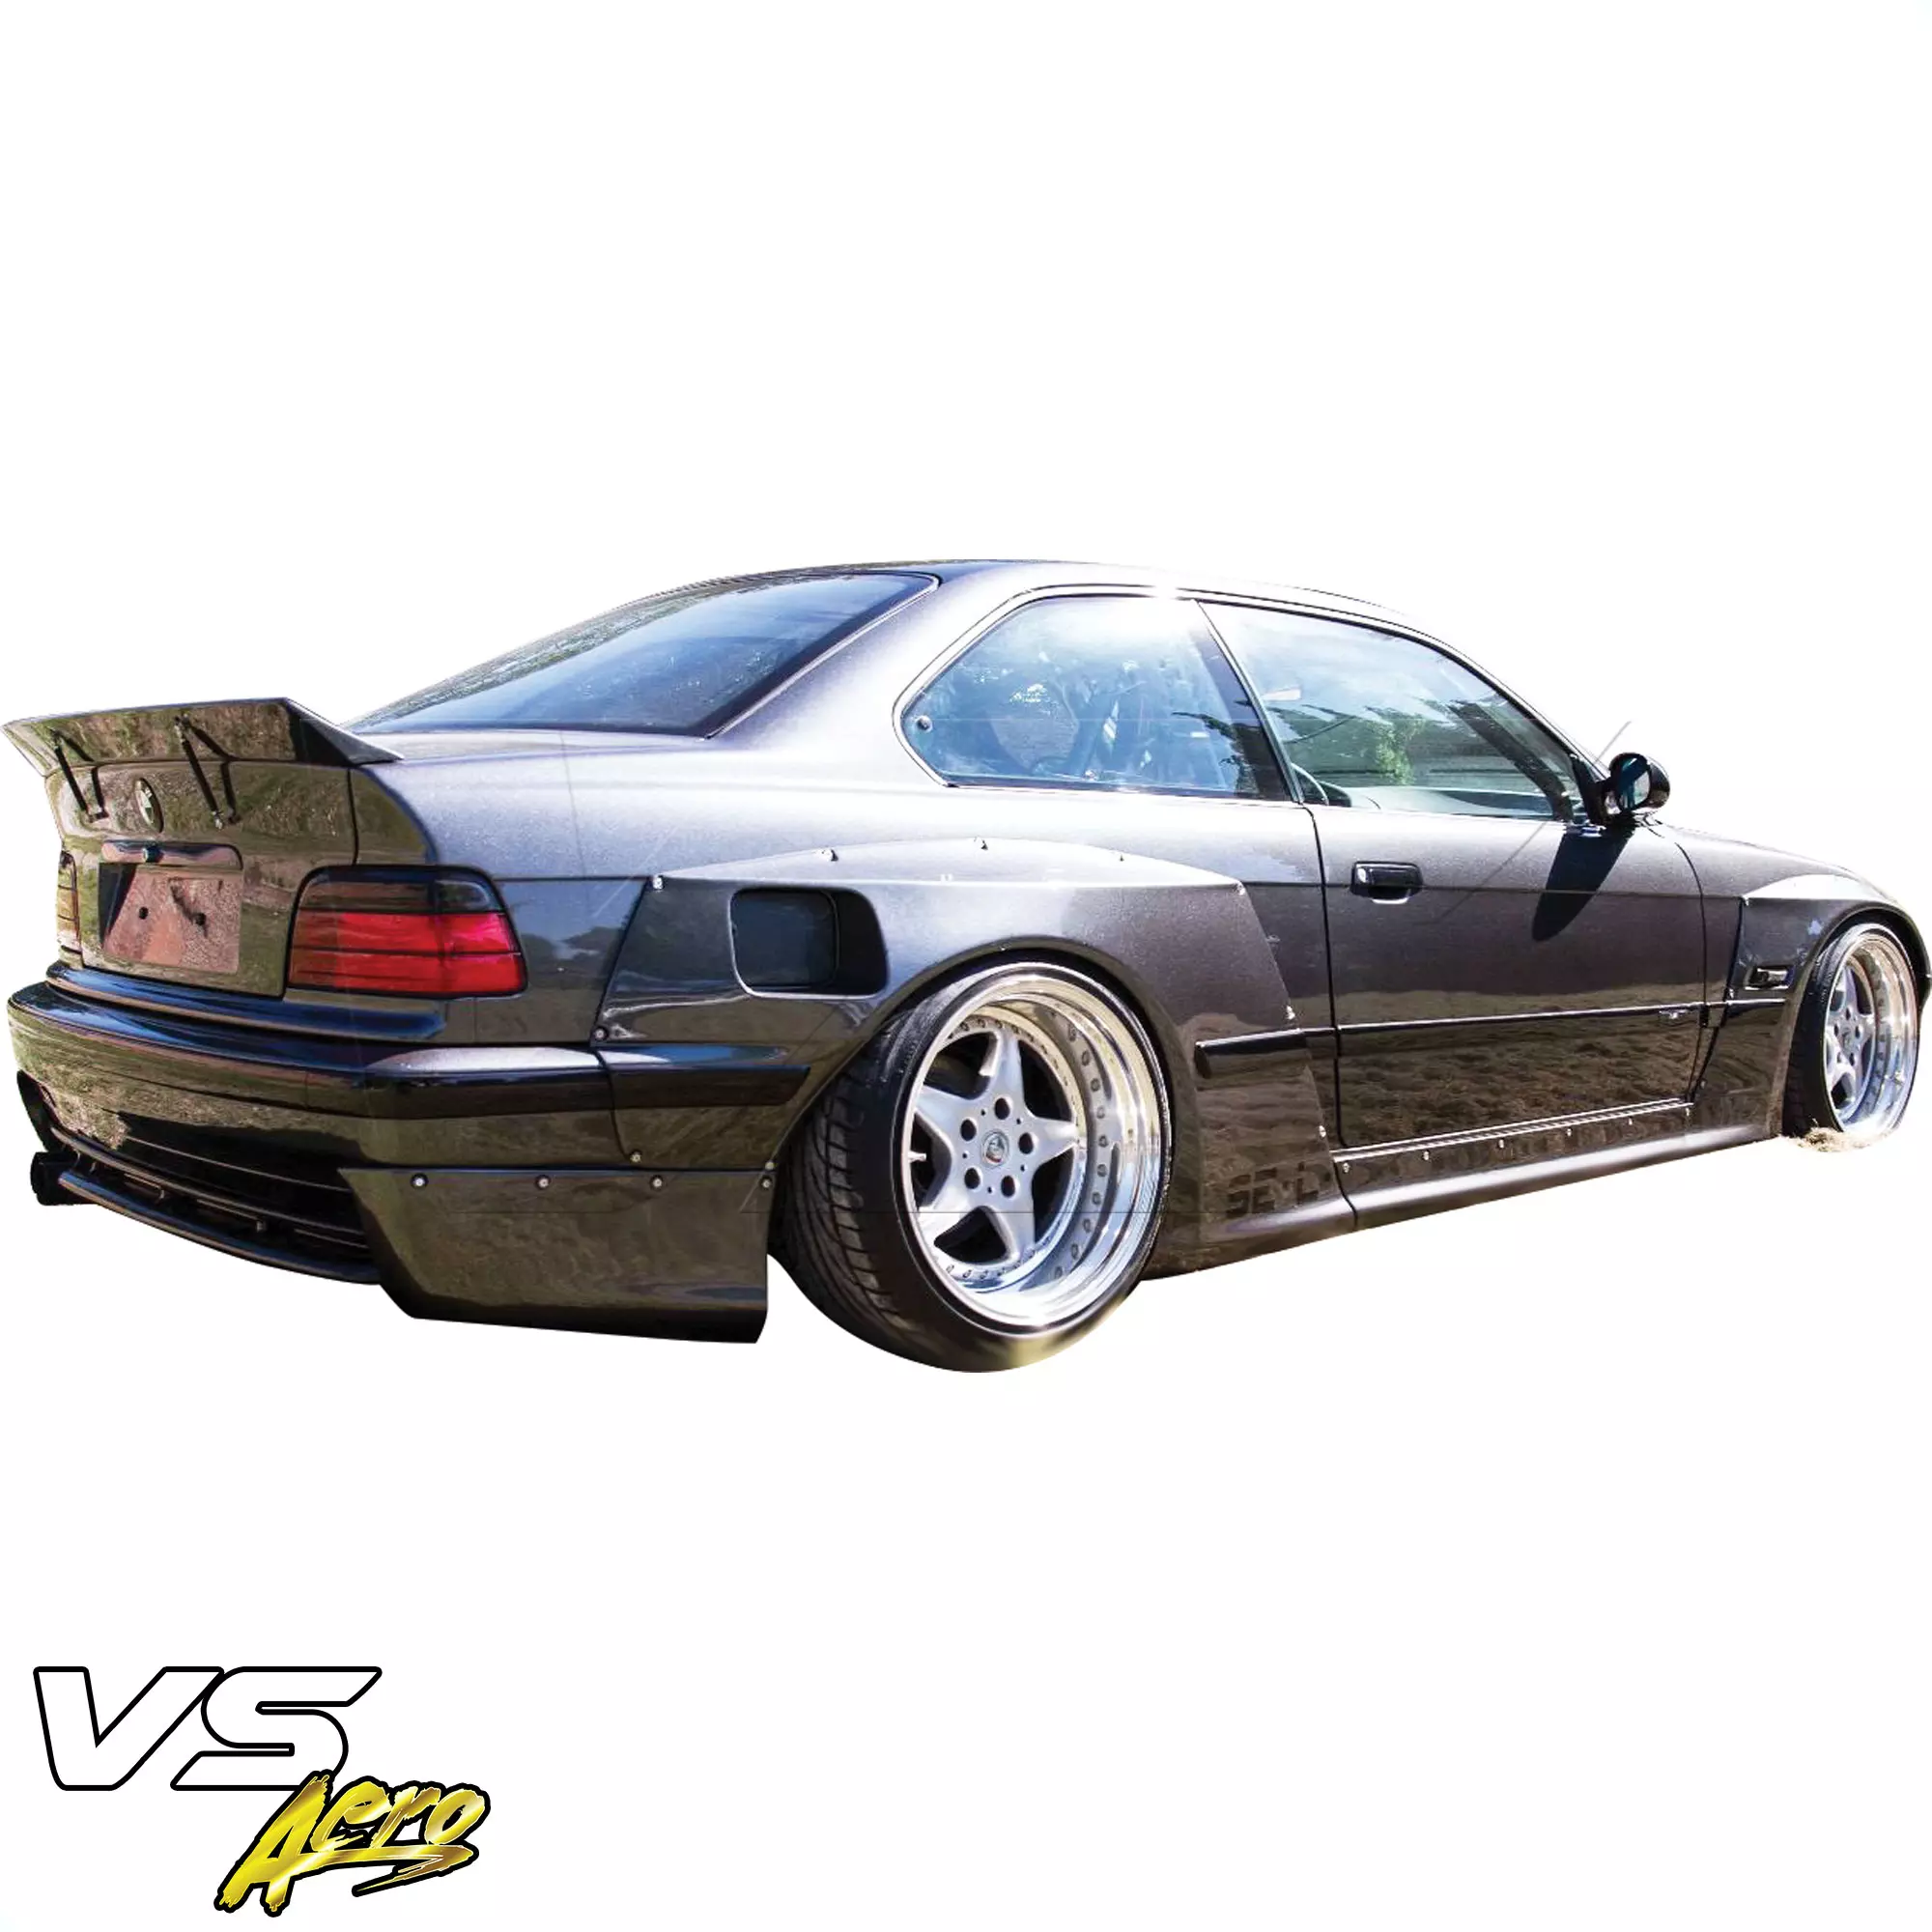 VSaero FRP TKYO Wide Body Kit 12pc w Wing > BMW 3-Series 325i 328i E36 1992-1998 > 2dr Coupe - Image 61